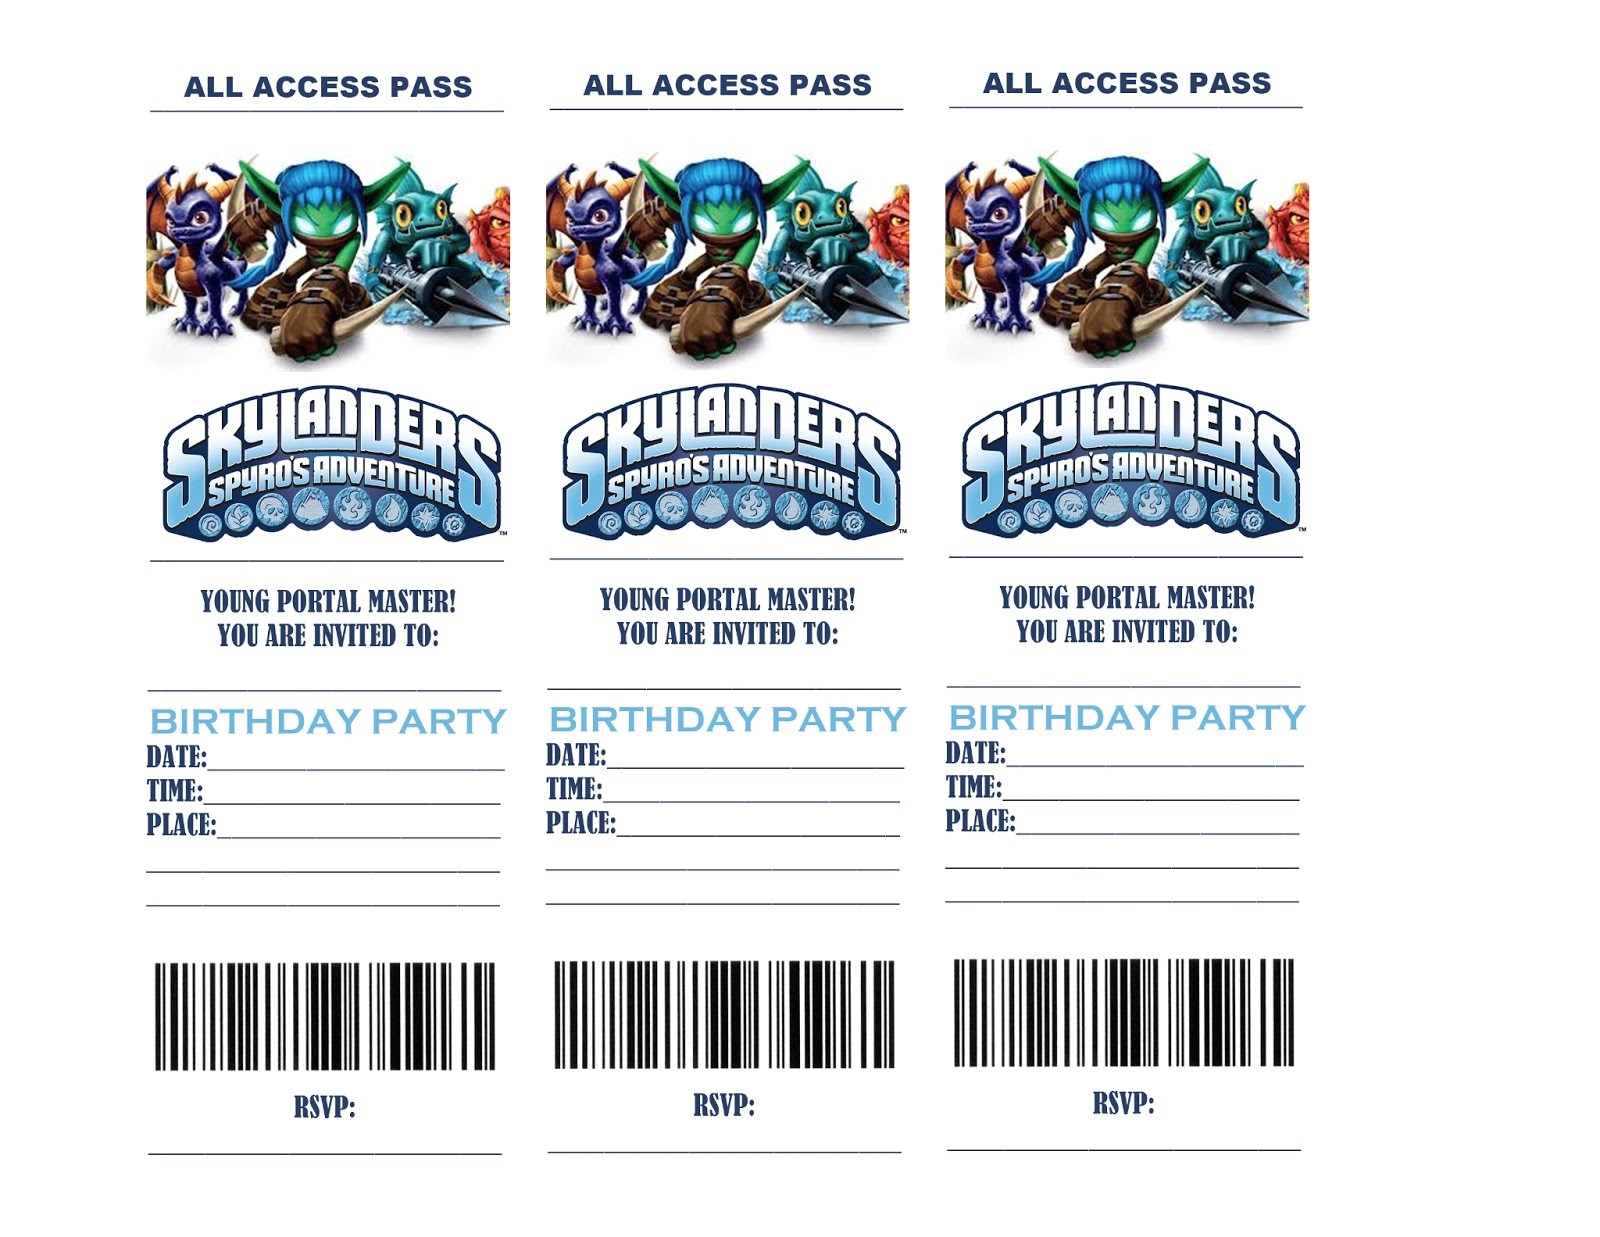 skylanders birthday party invitations